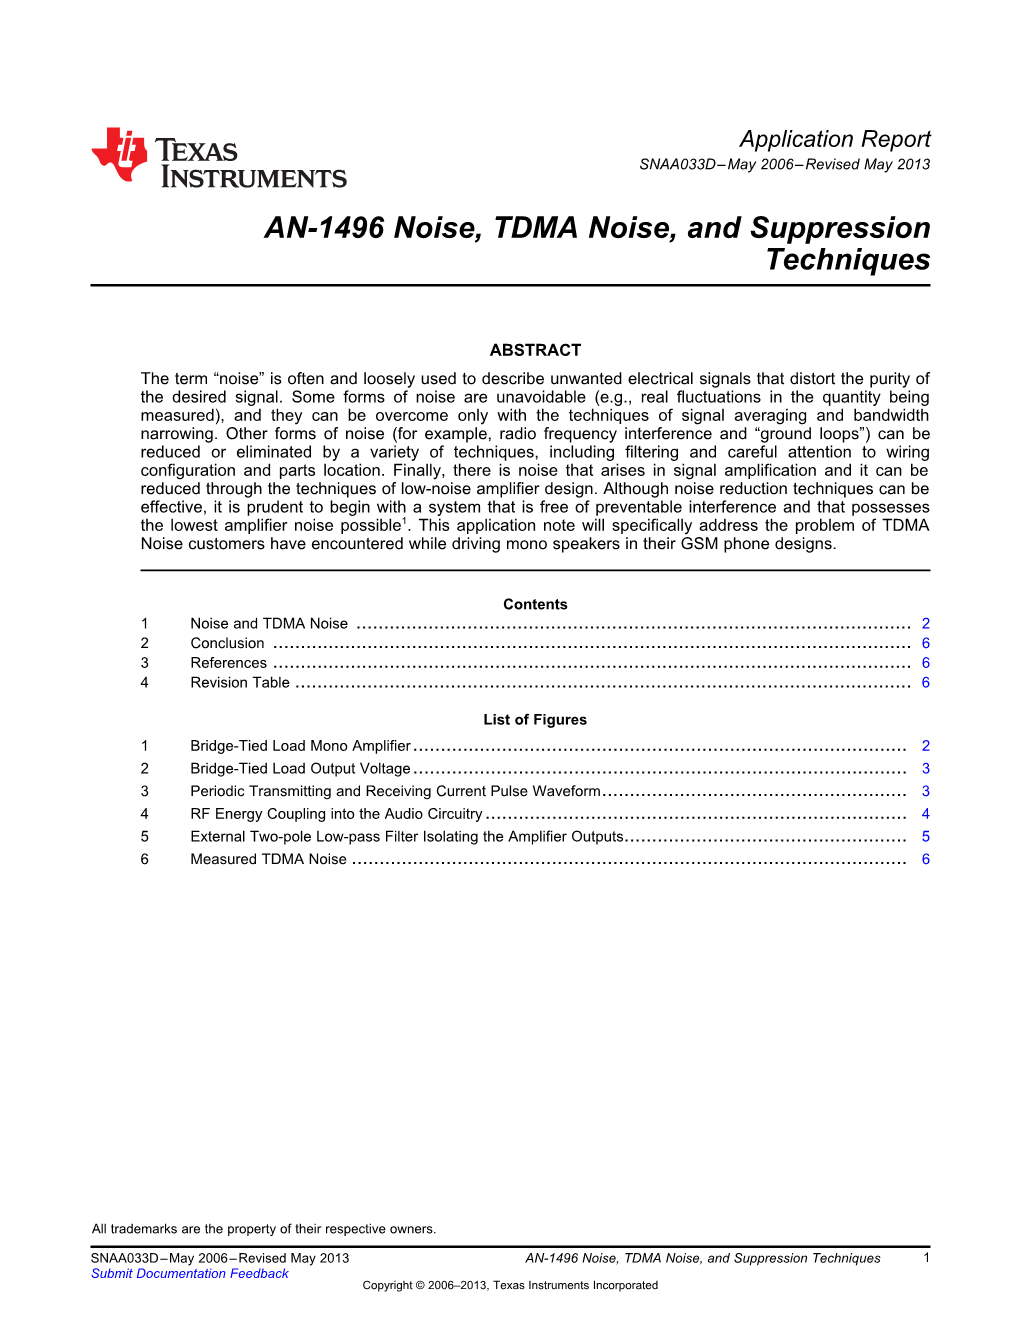 AN-1496 Noise, TDMA Noise, and Suppression Techniques (Rev. D)